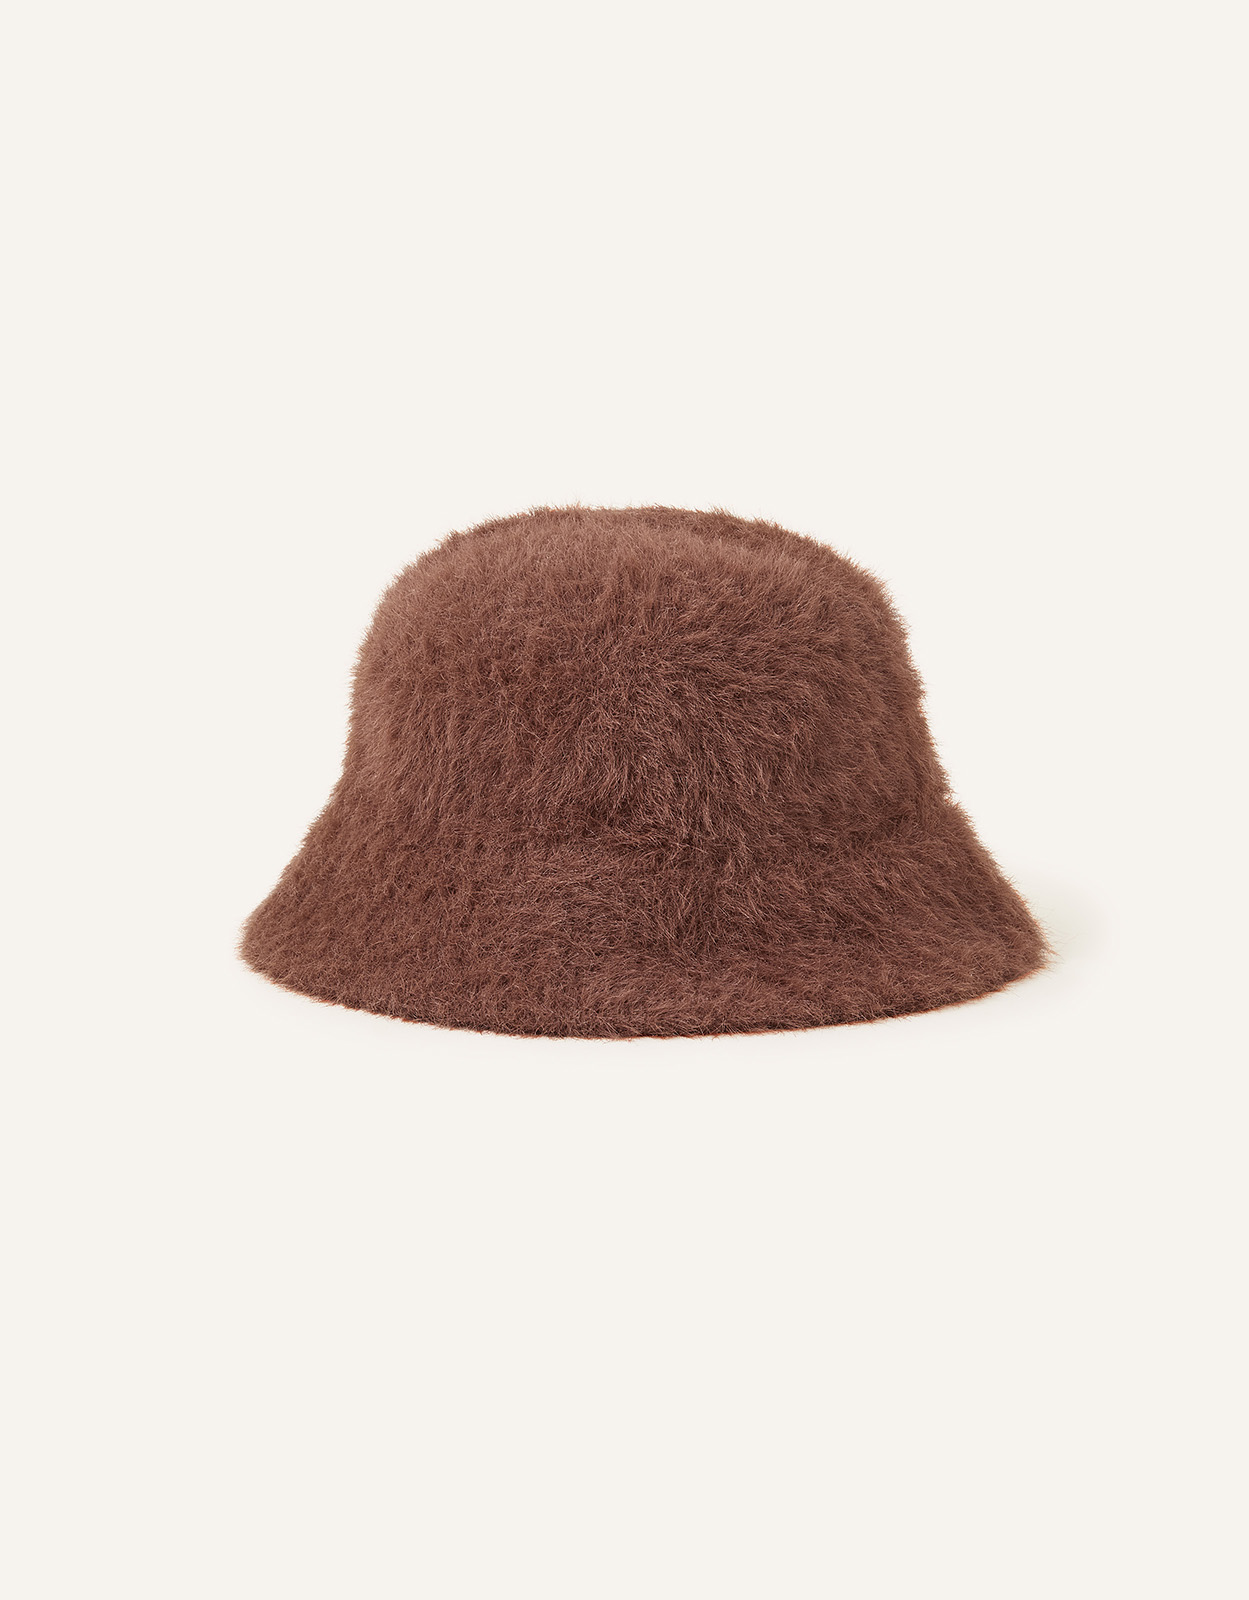 Accessorize Women's Fluffy Bucket Hat Brown